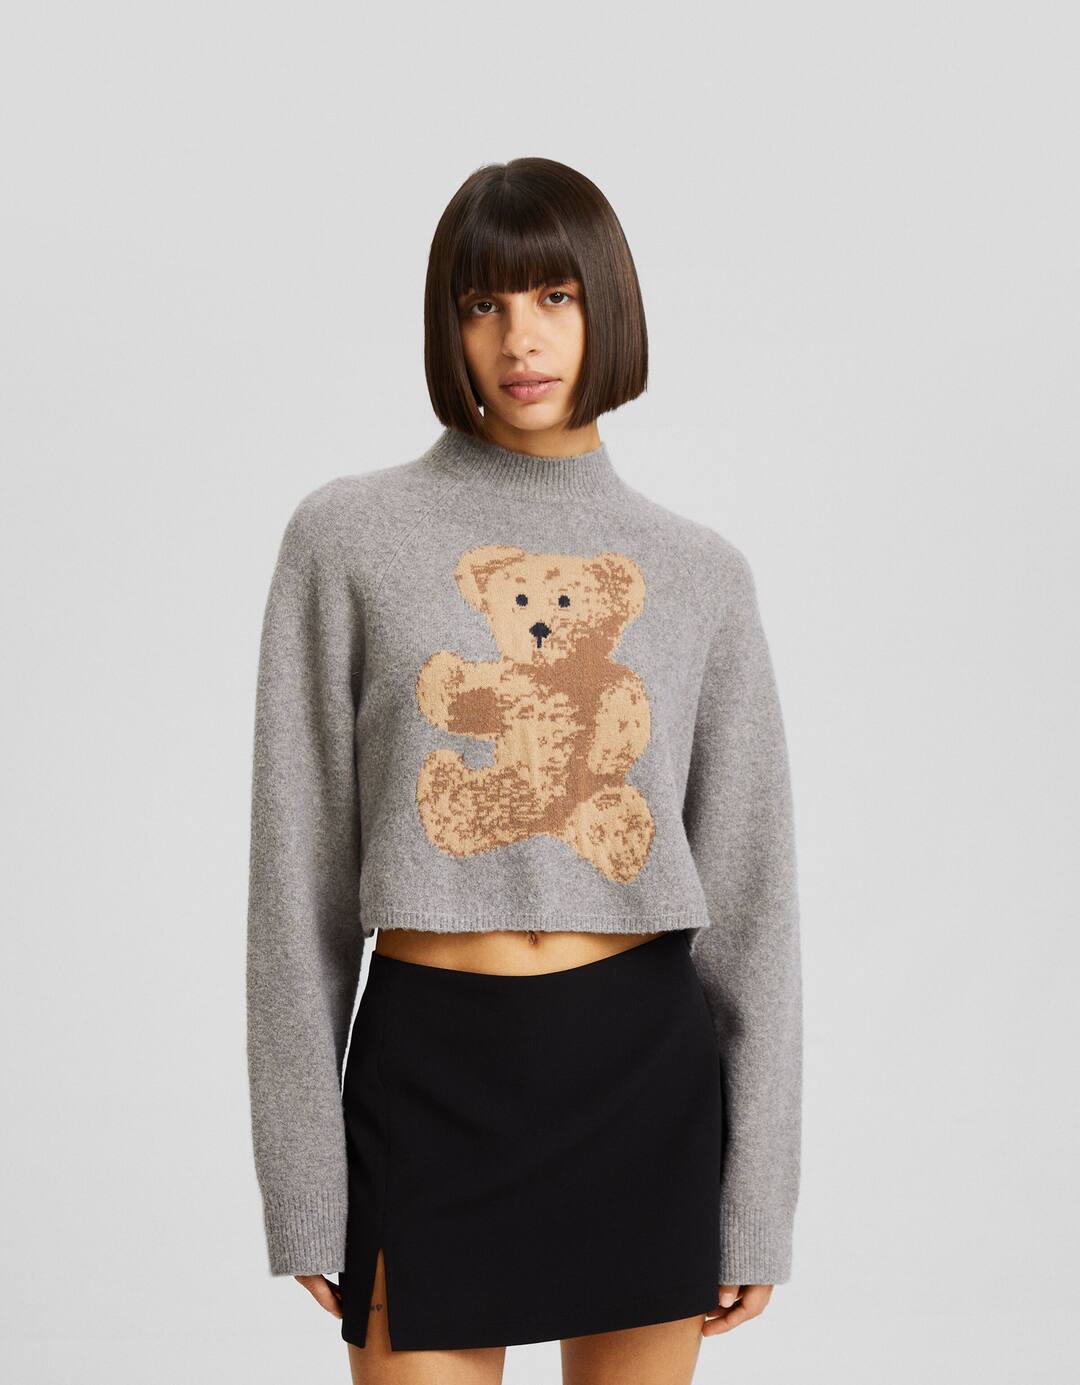 Džemper s medvedićem